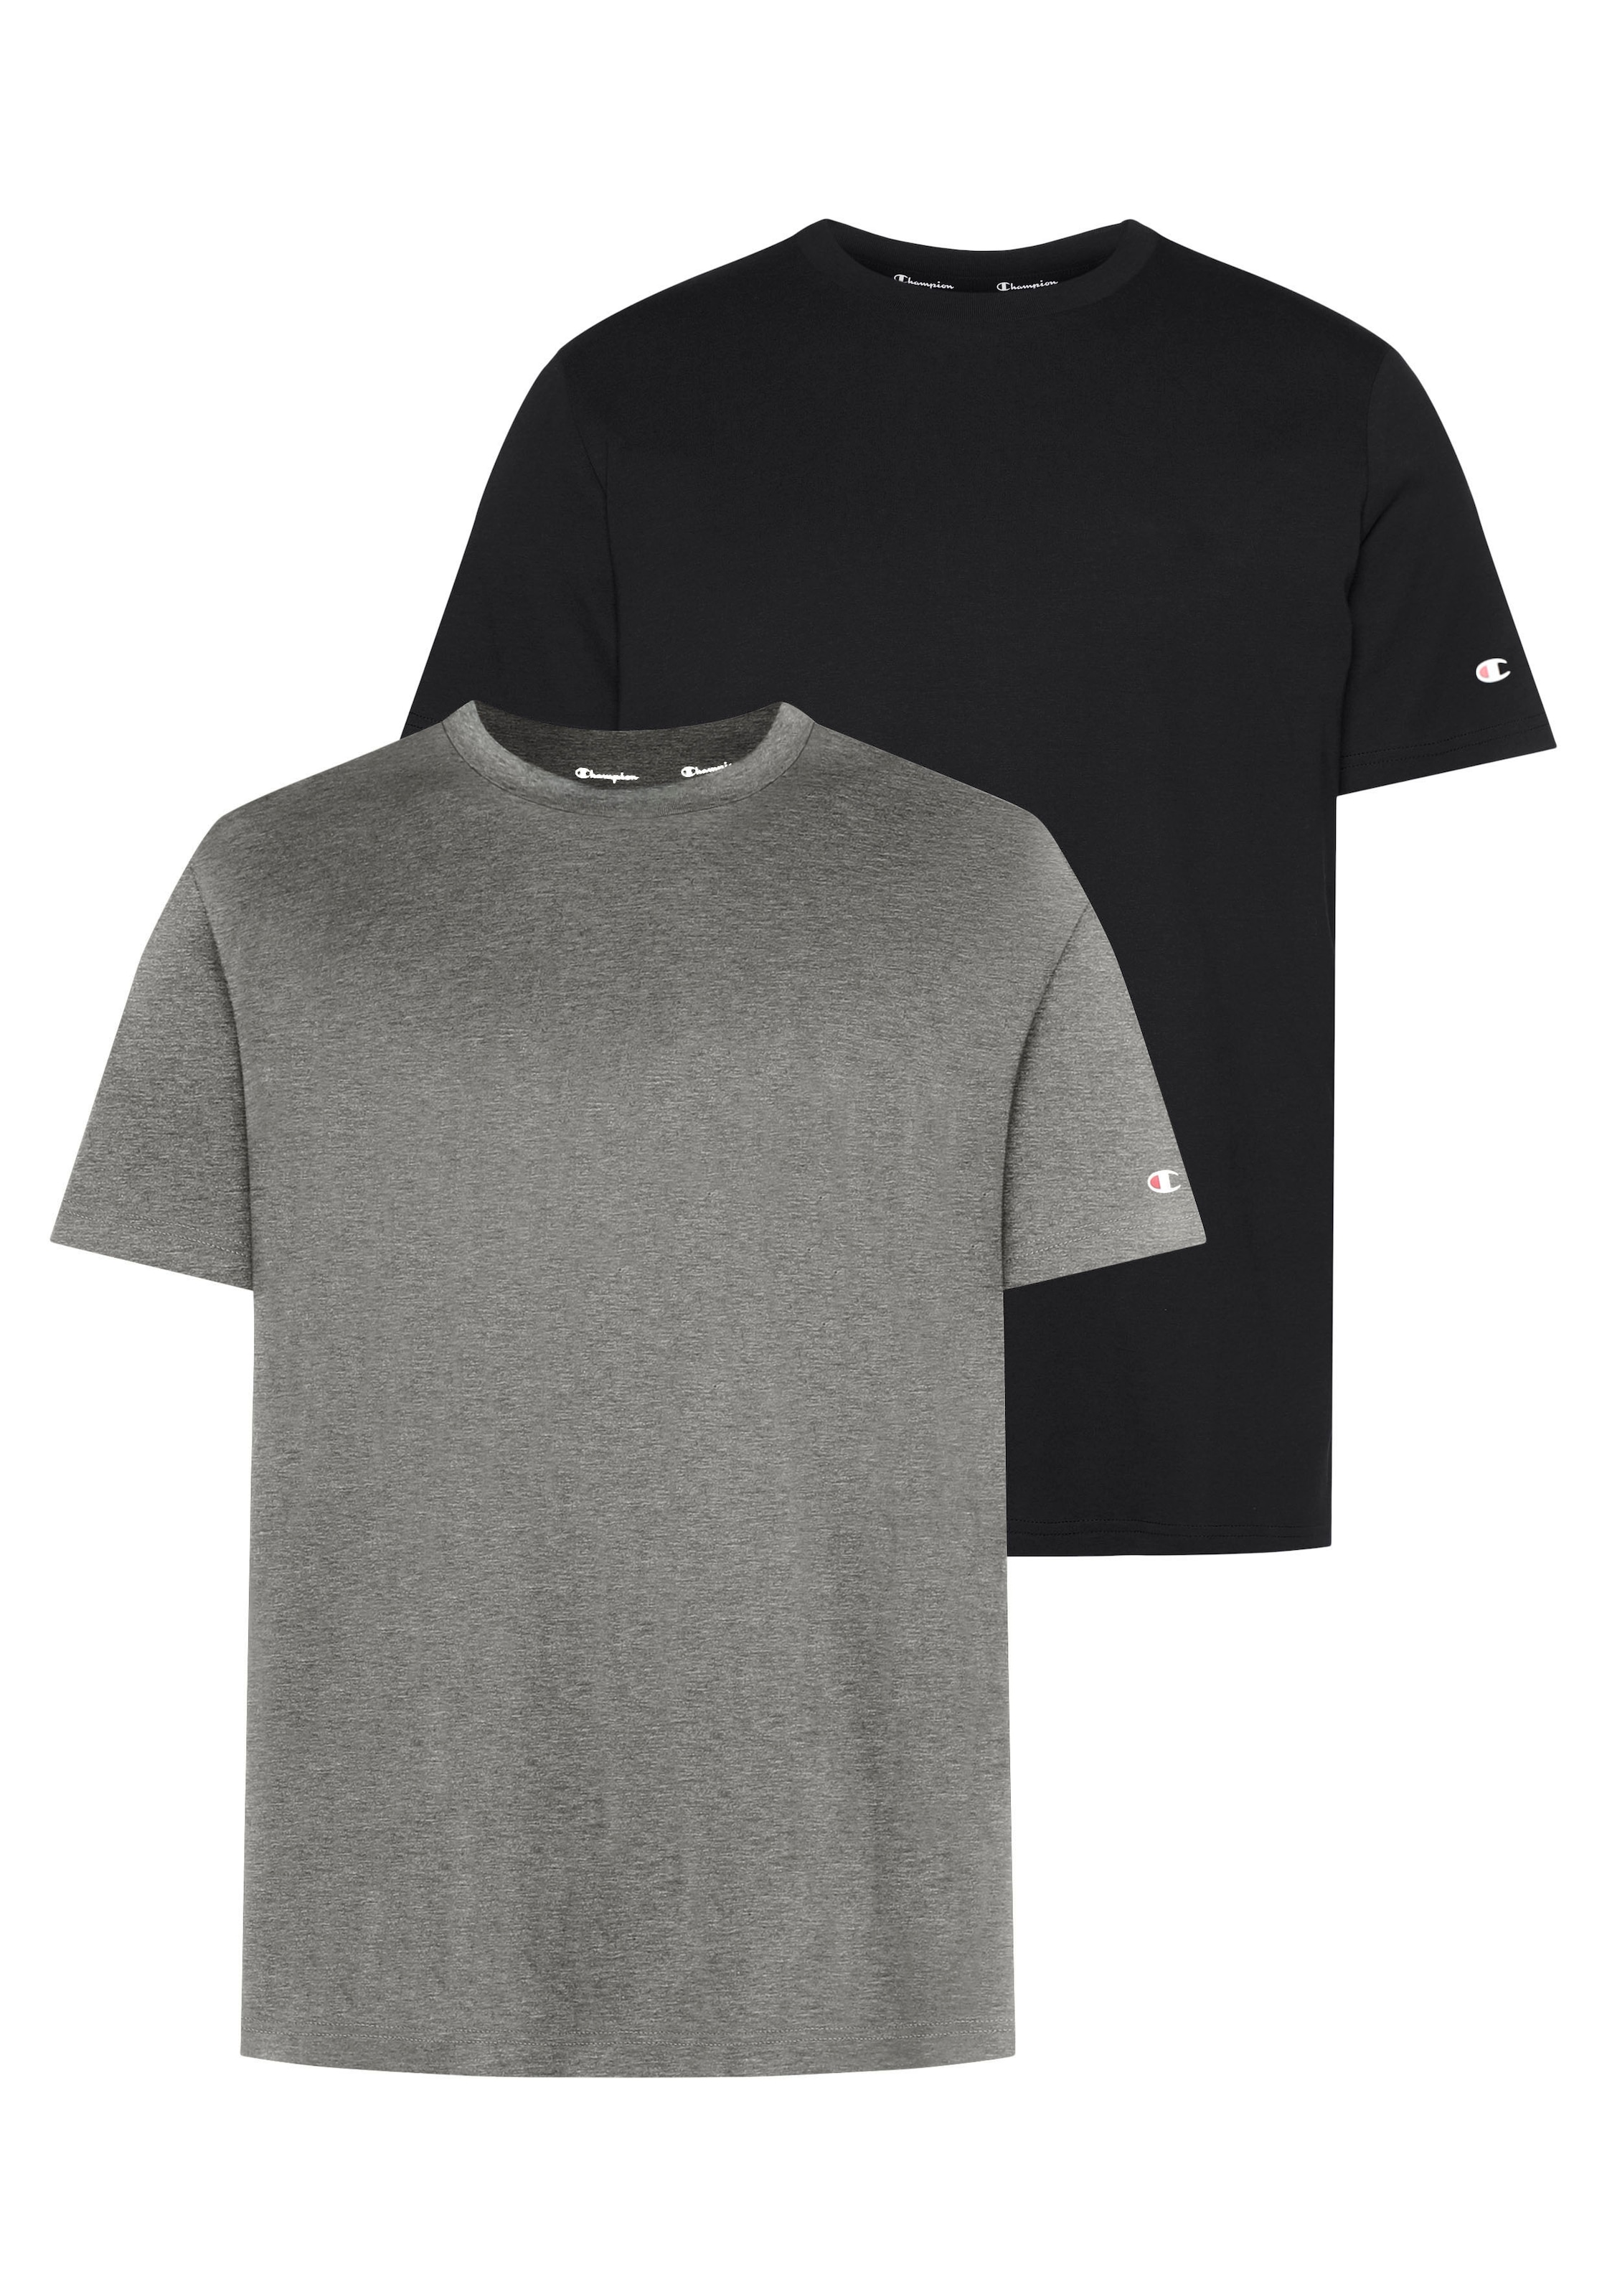 Crewneck tlg.) »Classic 2pack Champion 2 OTTO T-Shirt«, T-Shirt bestellen (Packung, bei